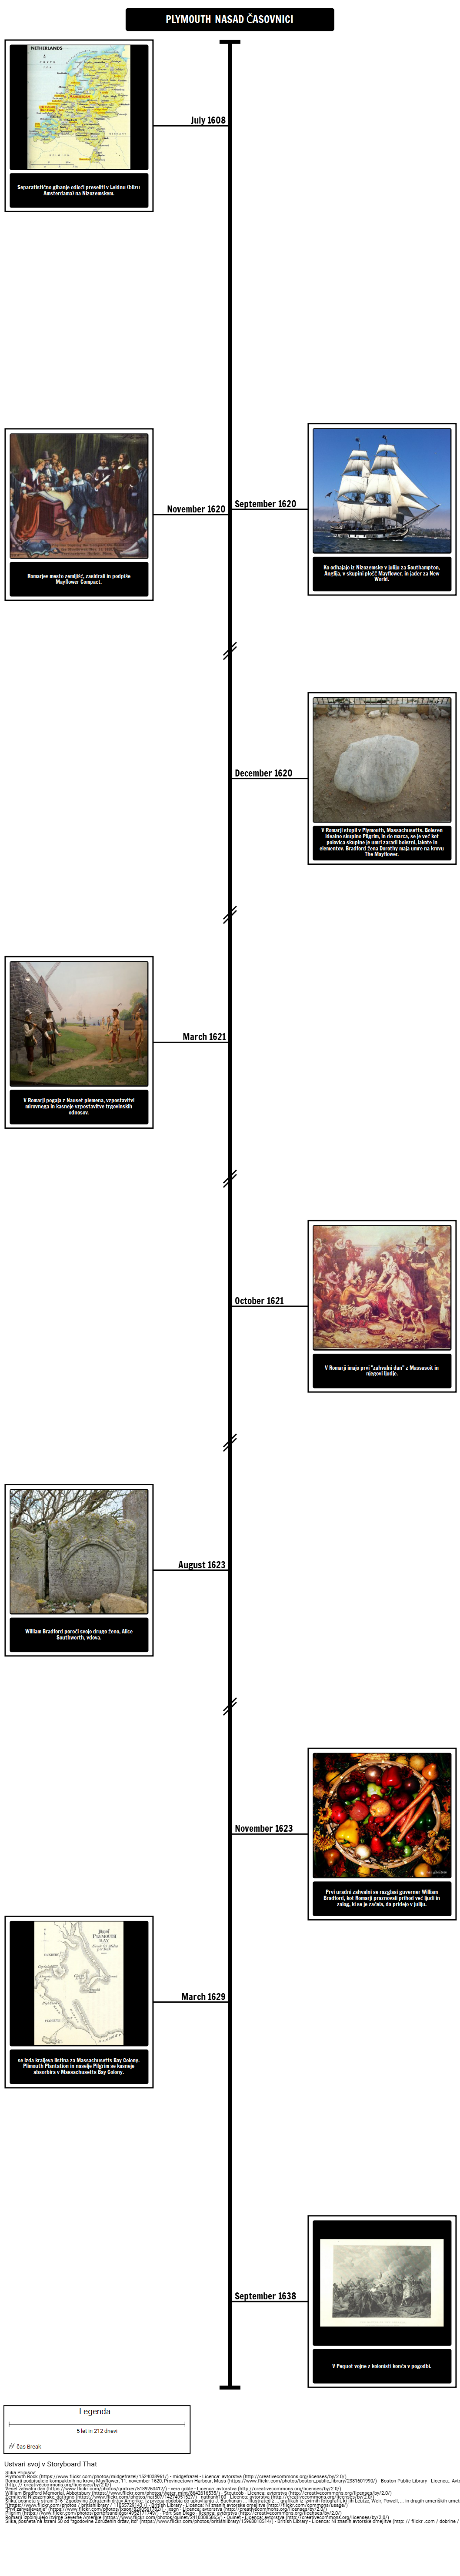 Od Plymouth Plantation Timeline